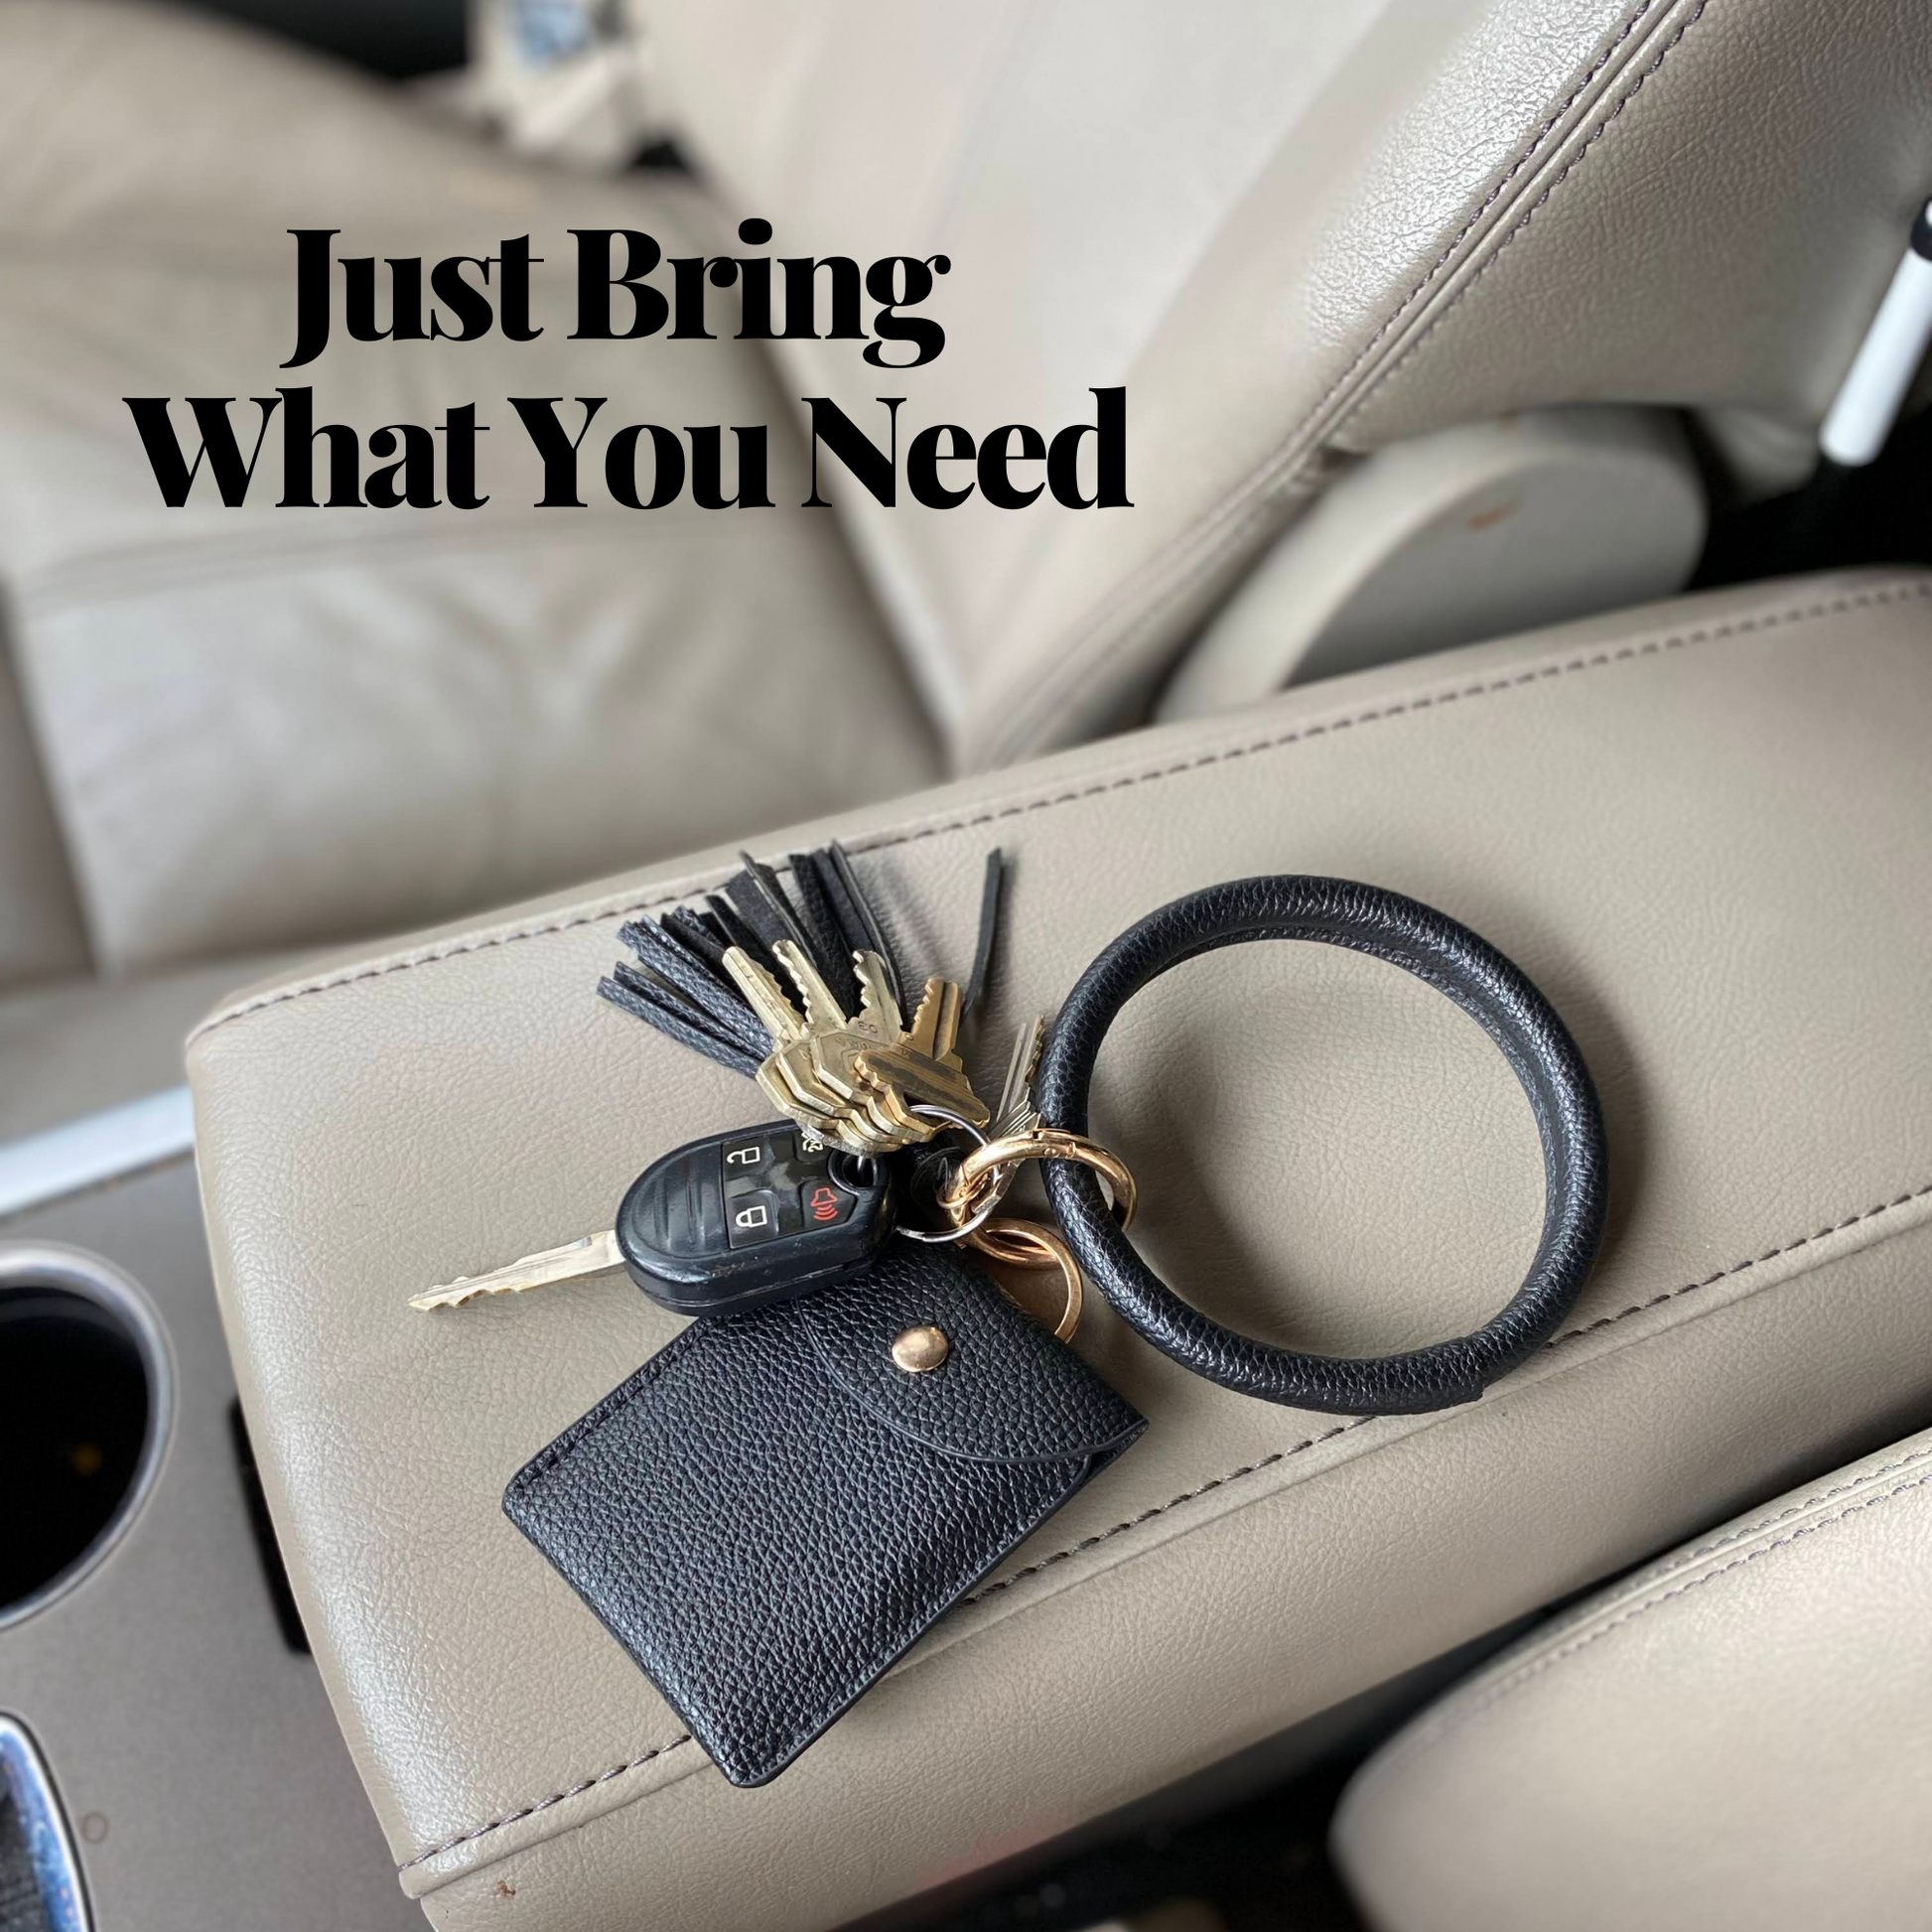 UnbuckleMe Car Seat Tool + Keychain Bundle – UnbuckleMe®